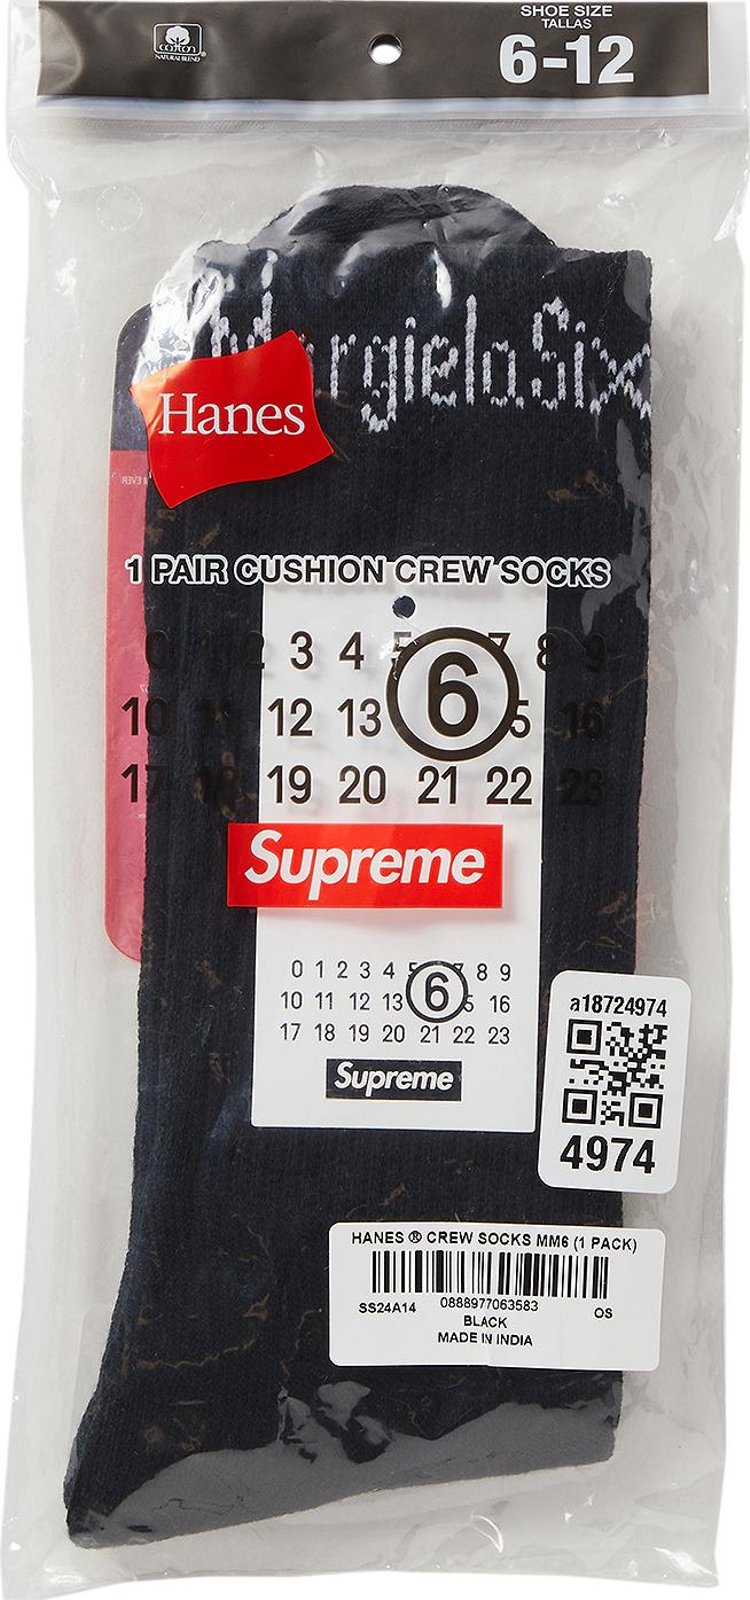 Supreme x MM6 Maison Margiela x Hanes Crew Socks (1 Pack) 'Black'